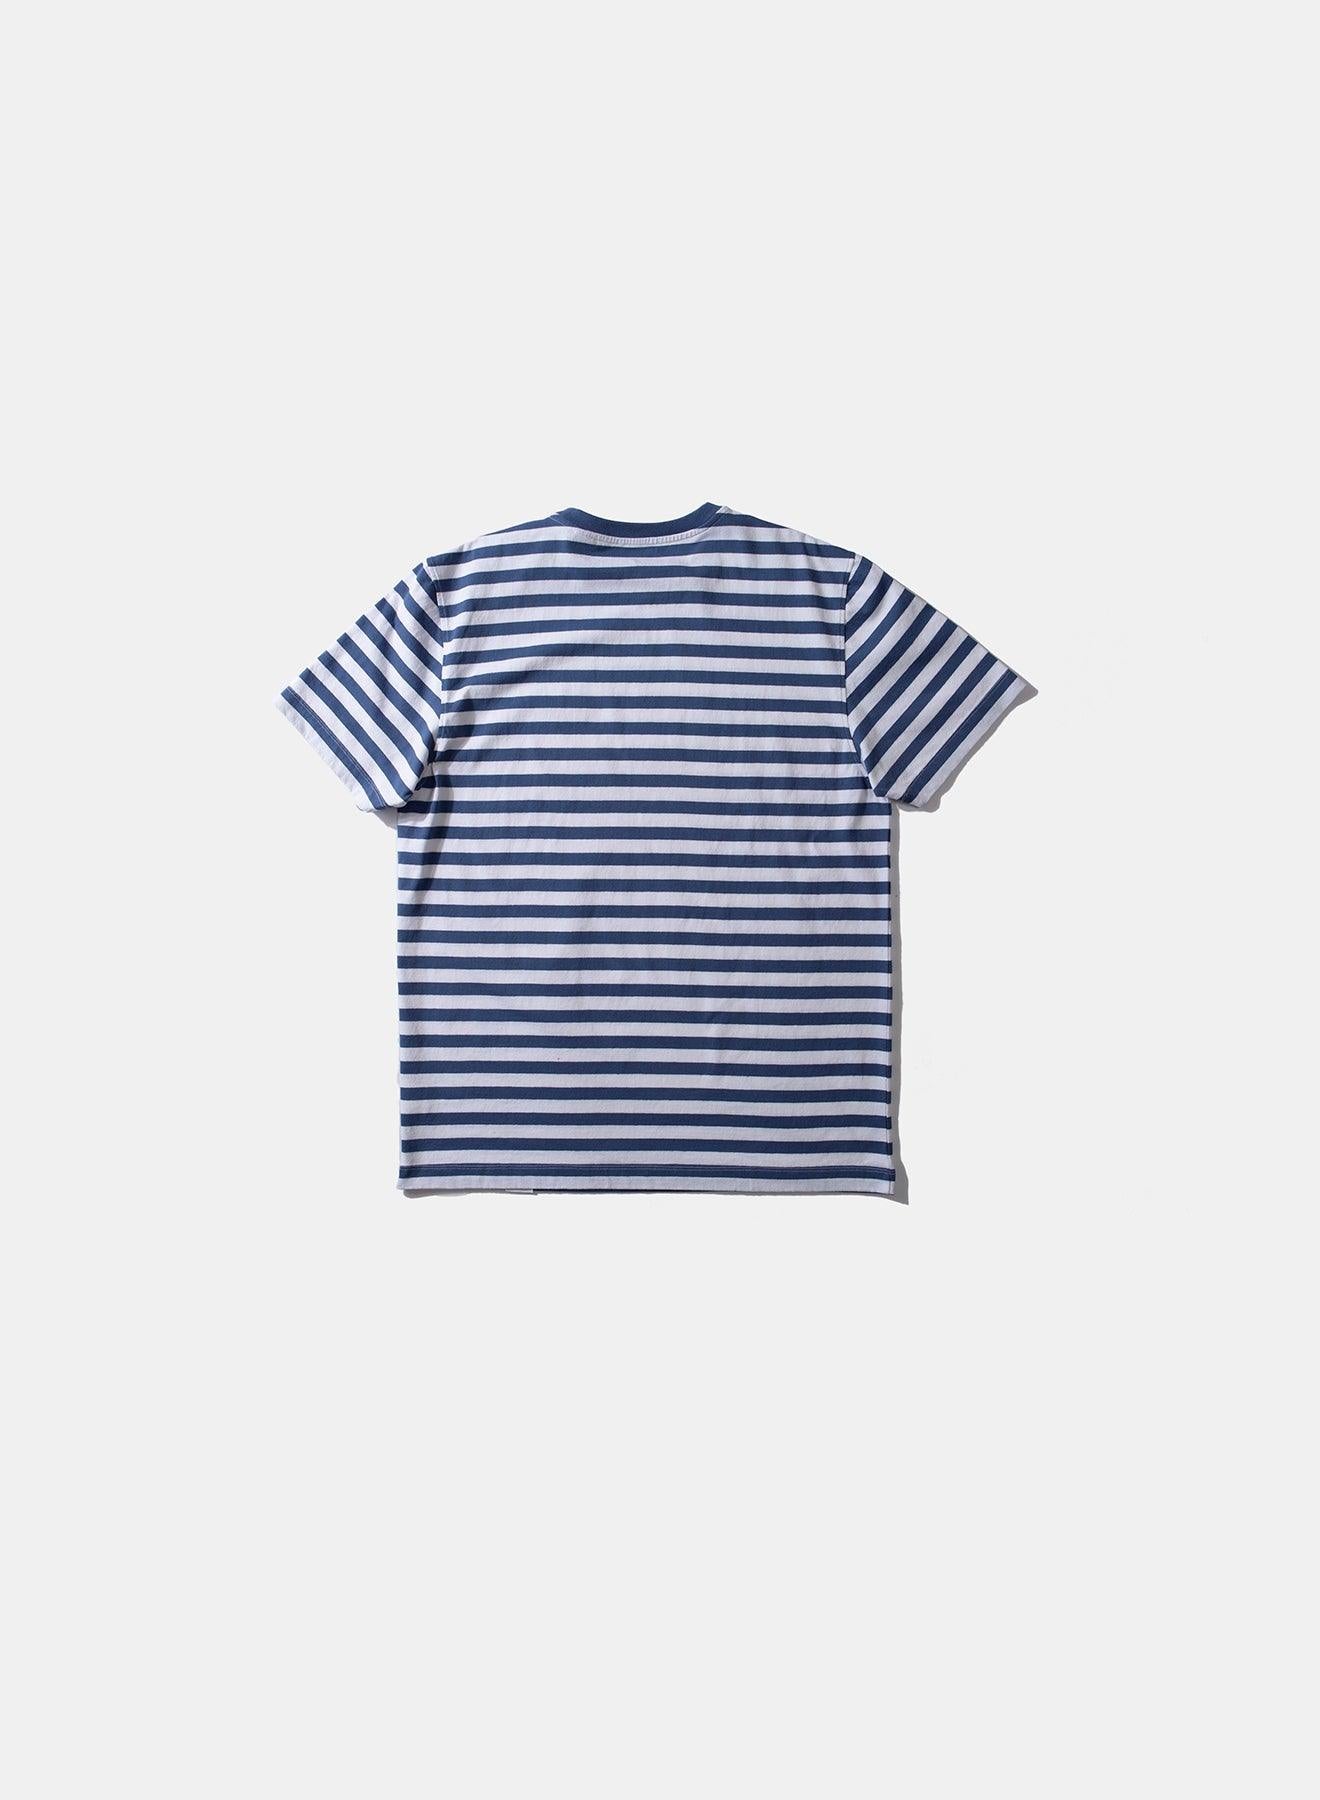 Camiseta Special Duck Stripes Horizontal Blue - ECRU